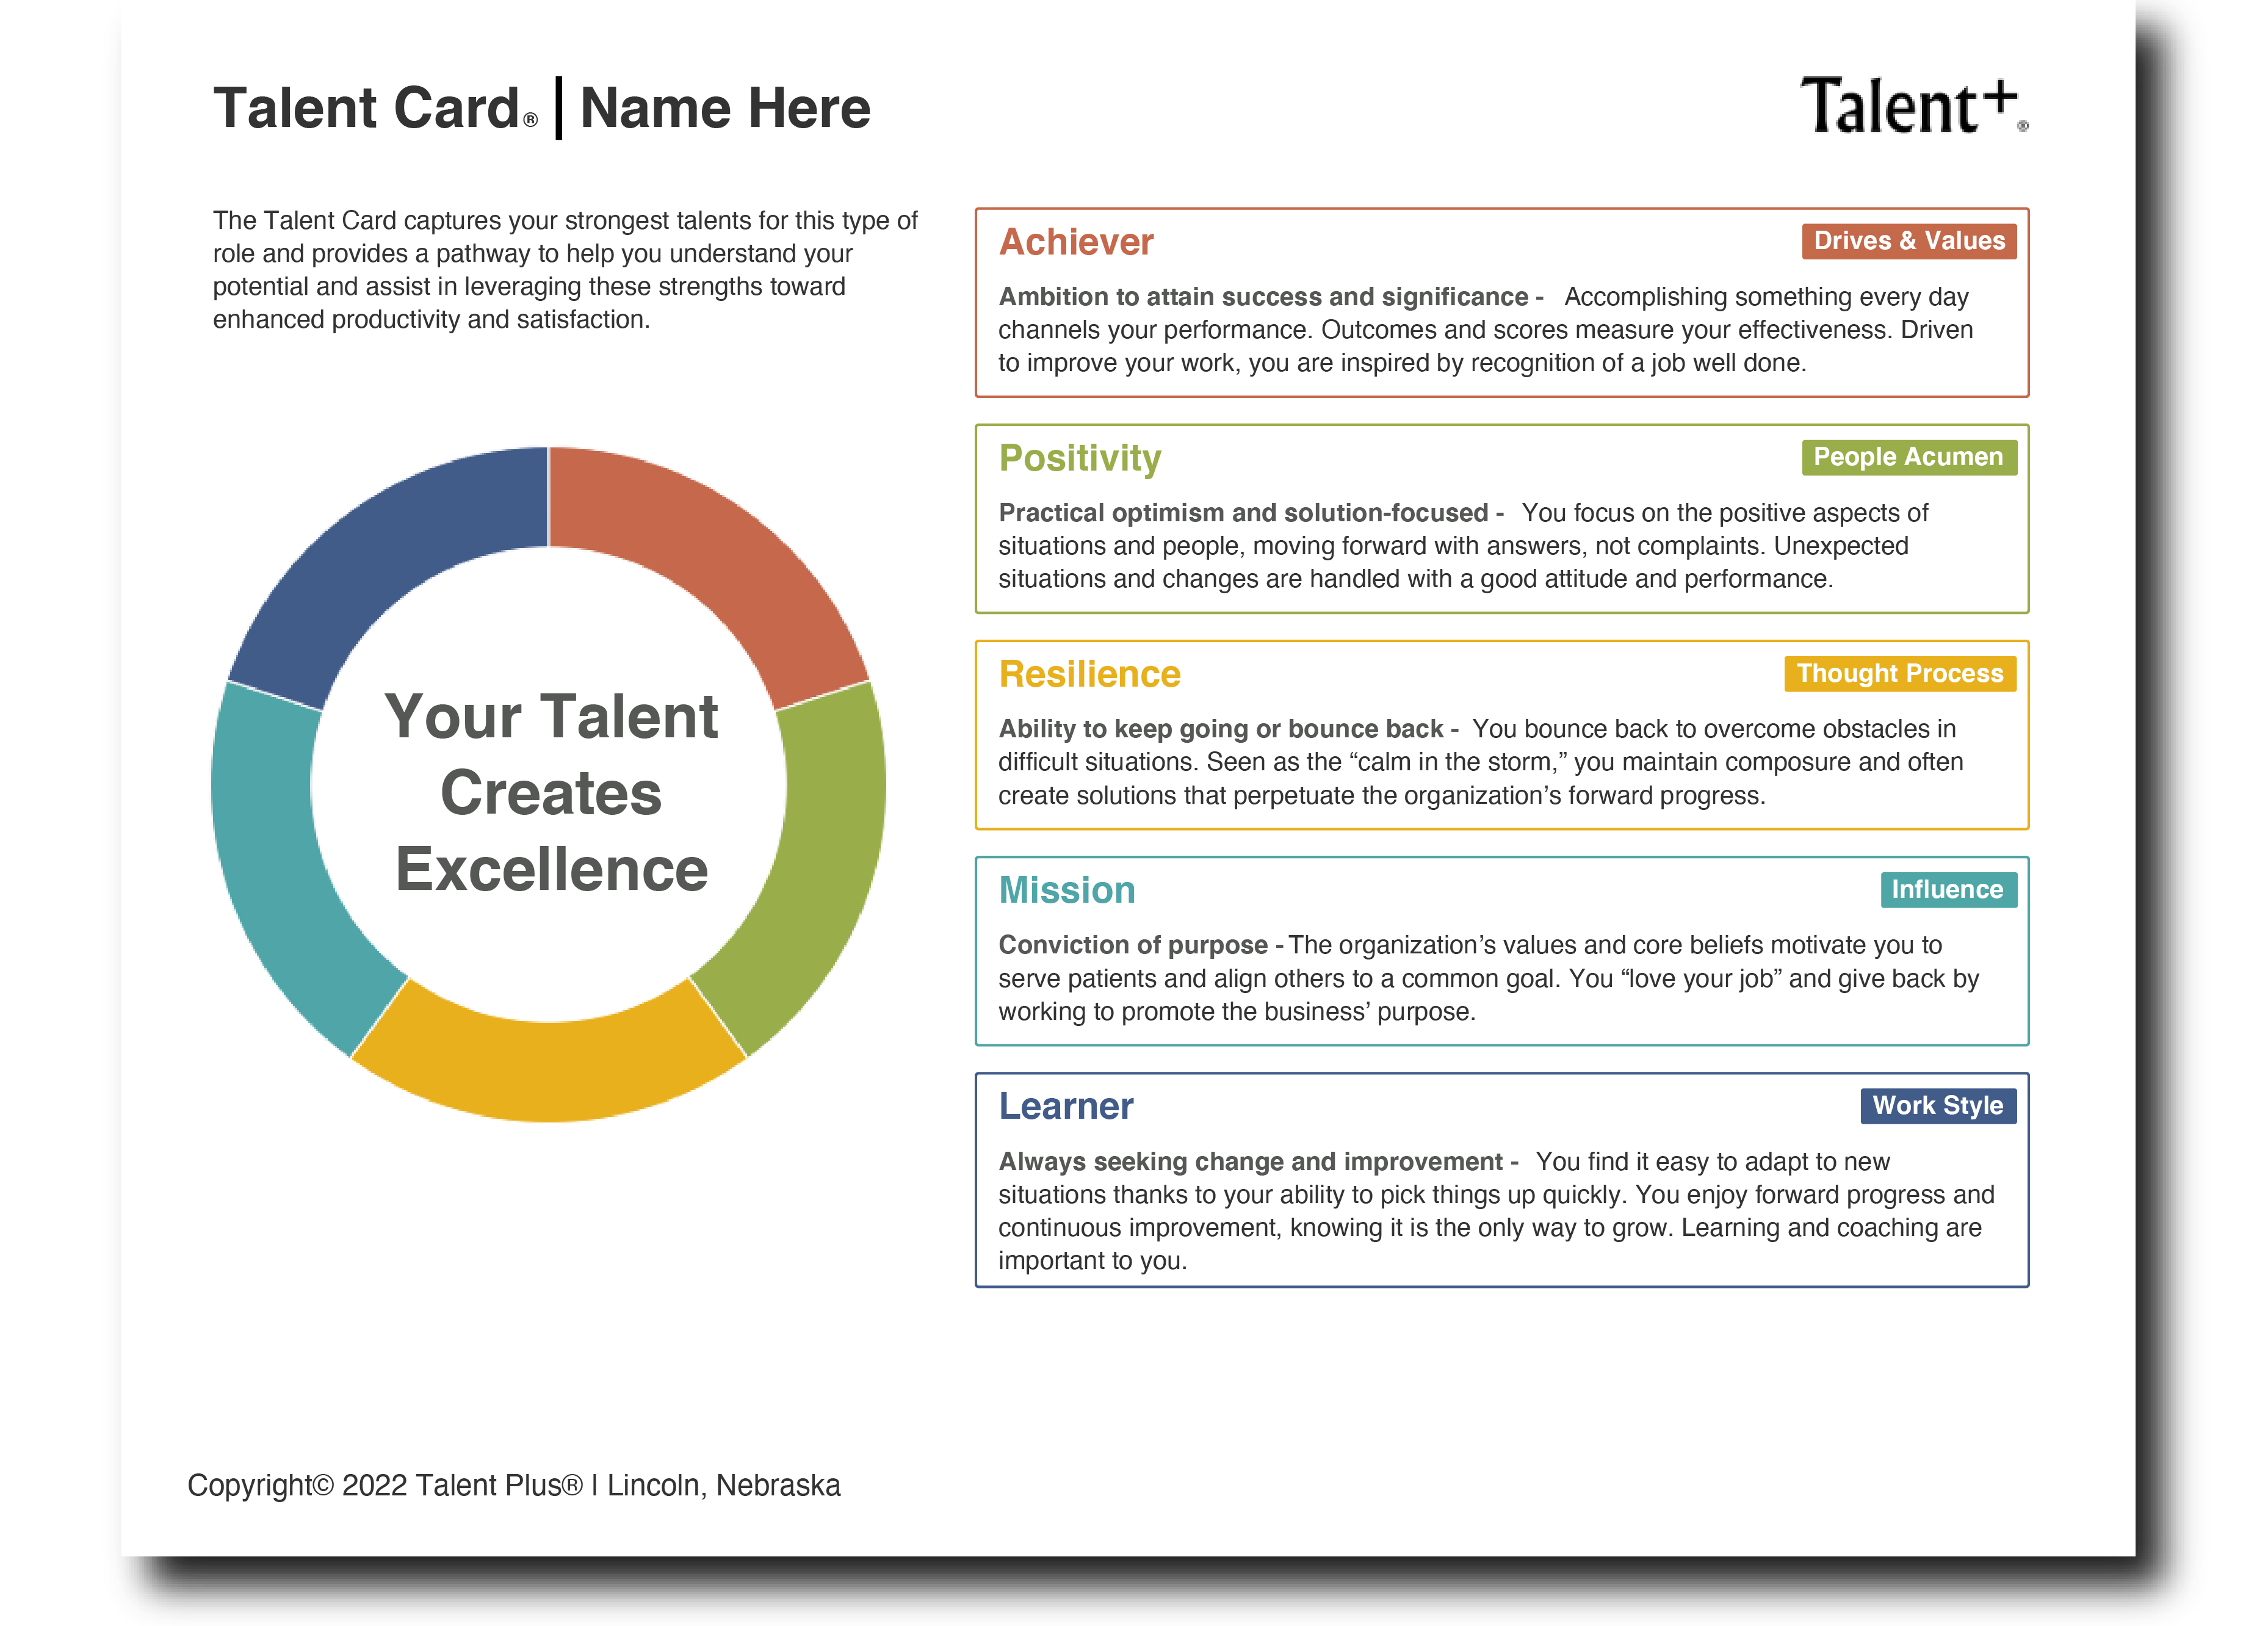 Talent Card Example | Talent Plus